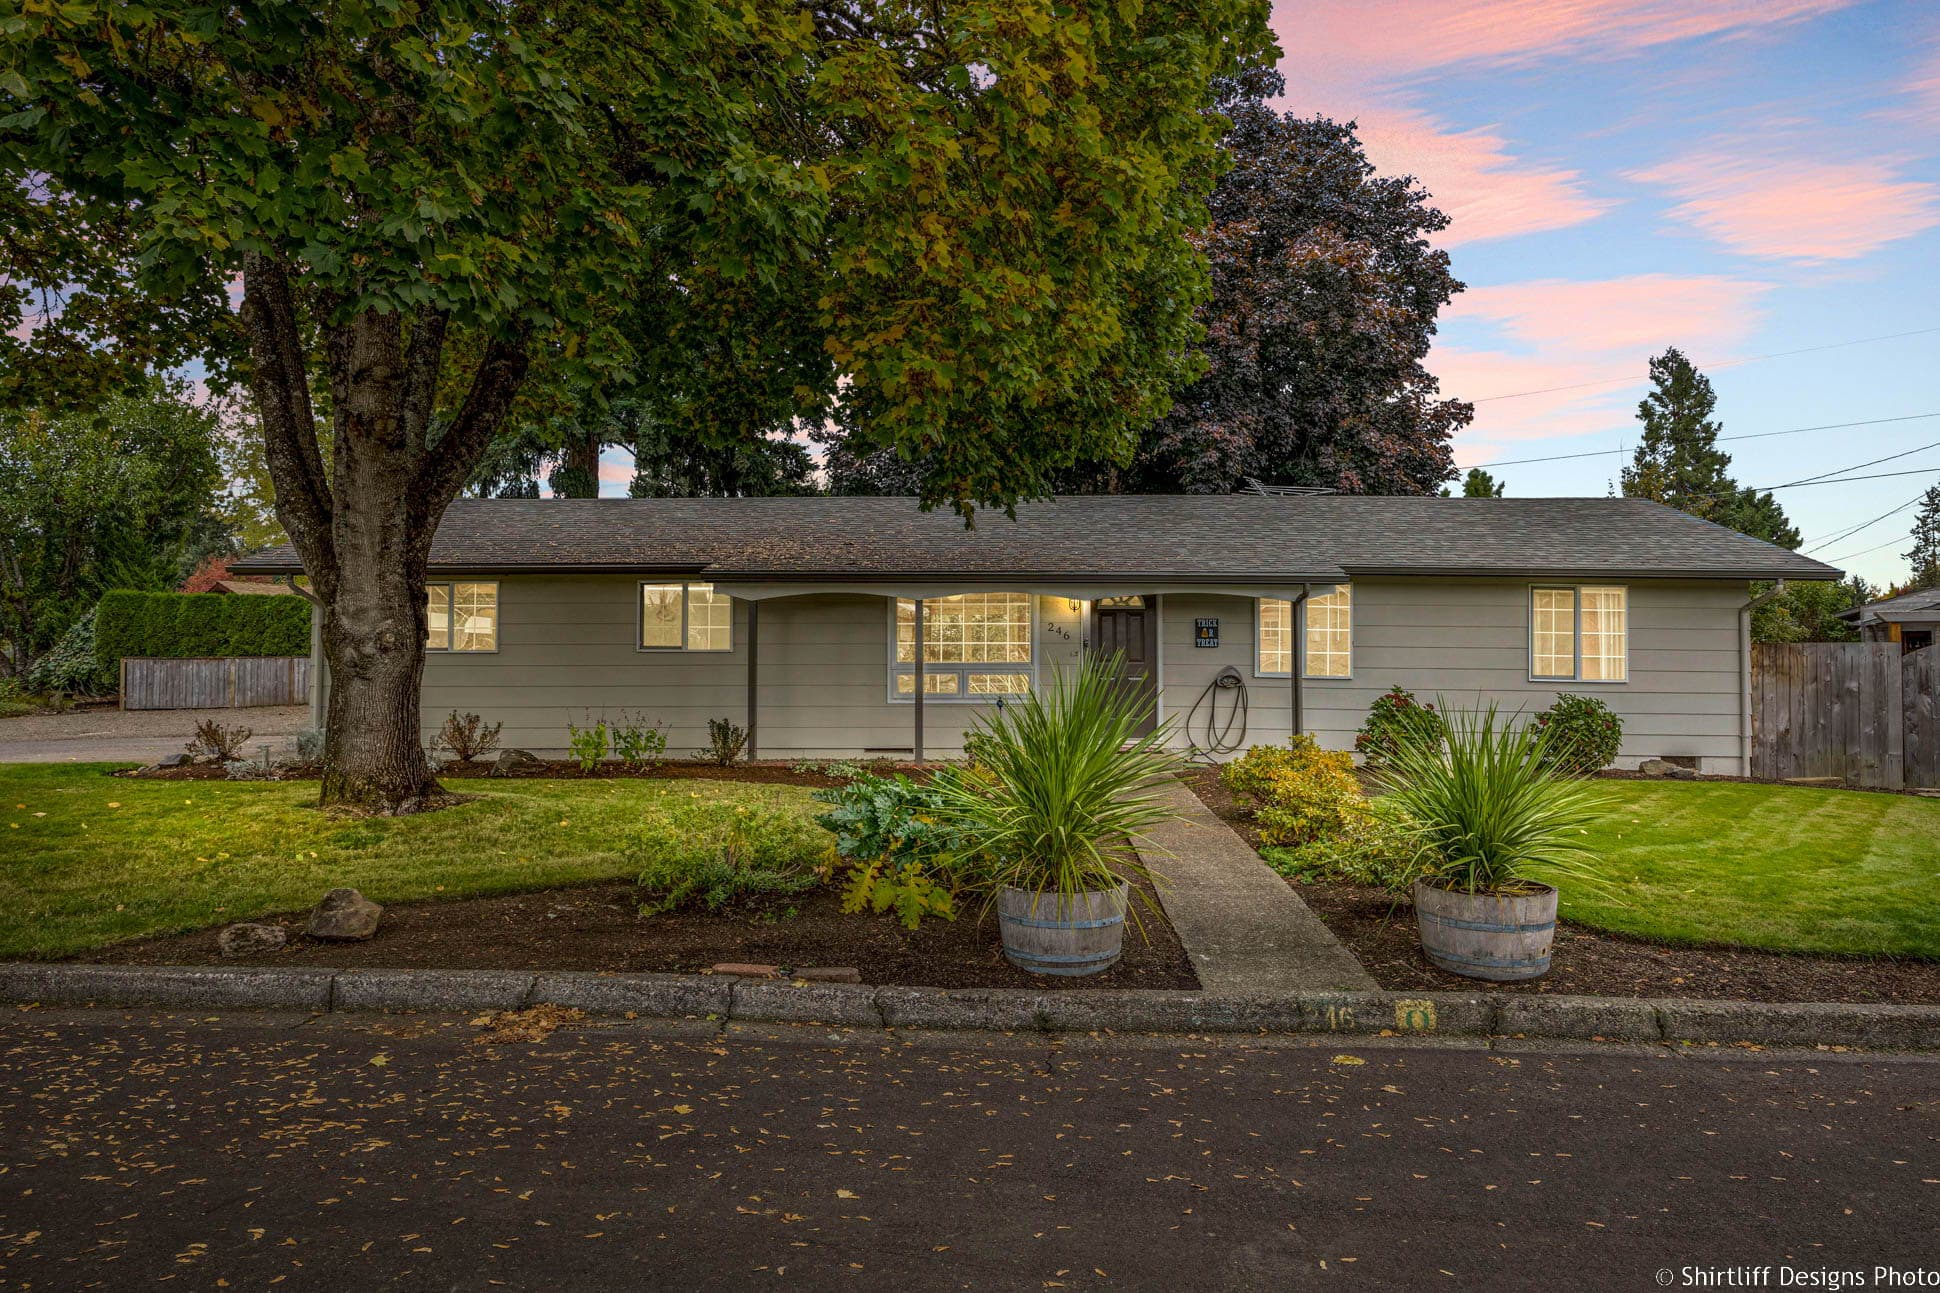 Heart & Home Real Estate - Eugene Realtors, US, buy home